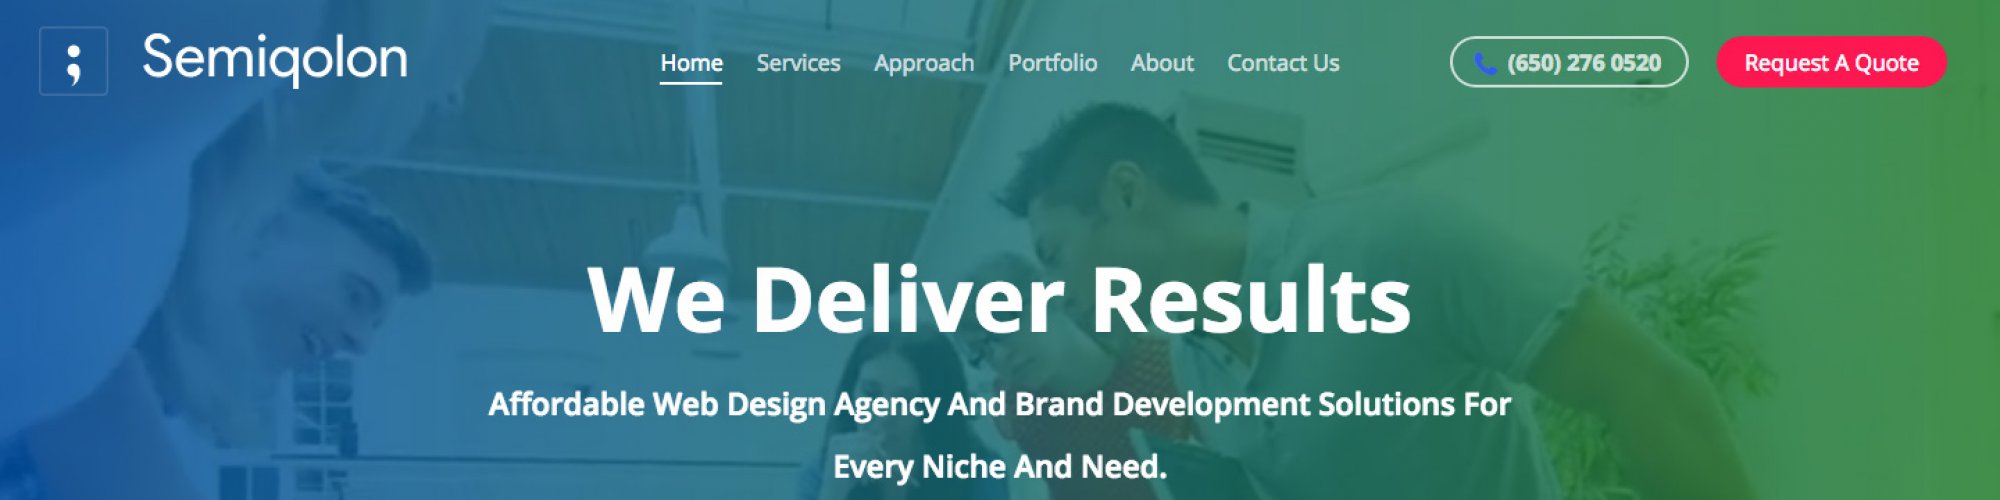 Semiqolon - Premium & Affordable Web Design Agency